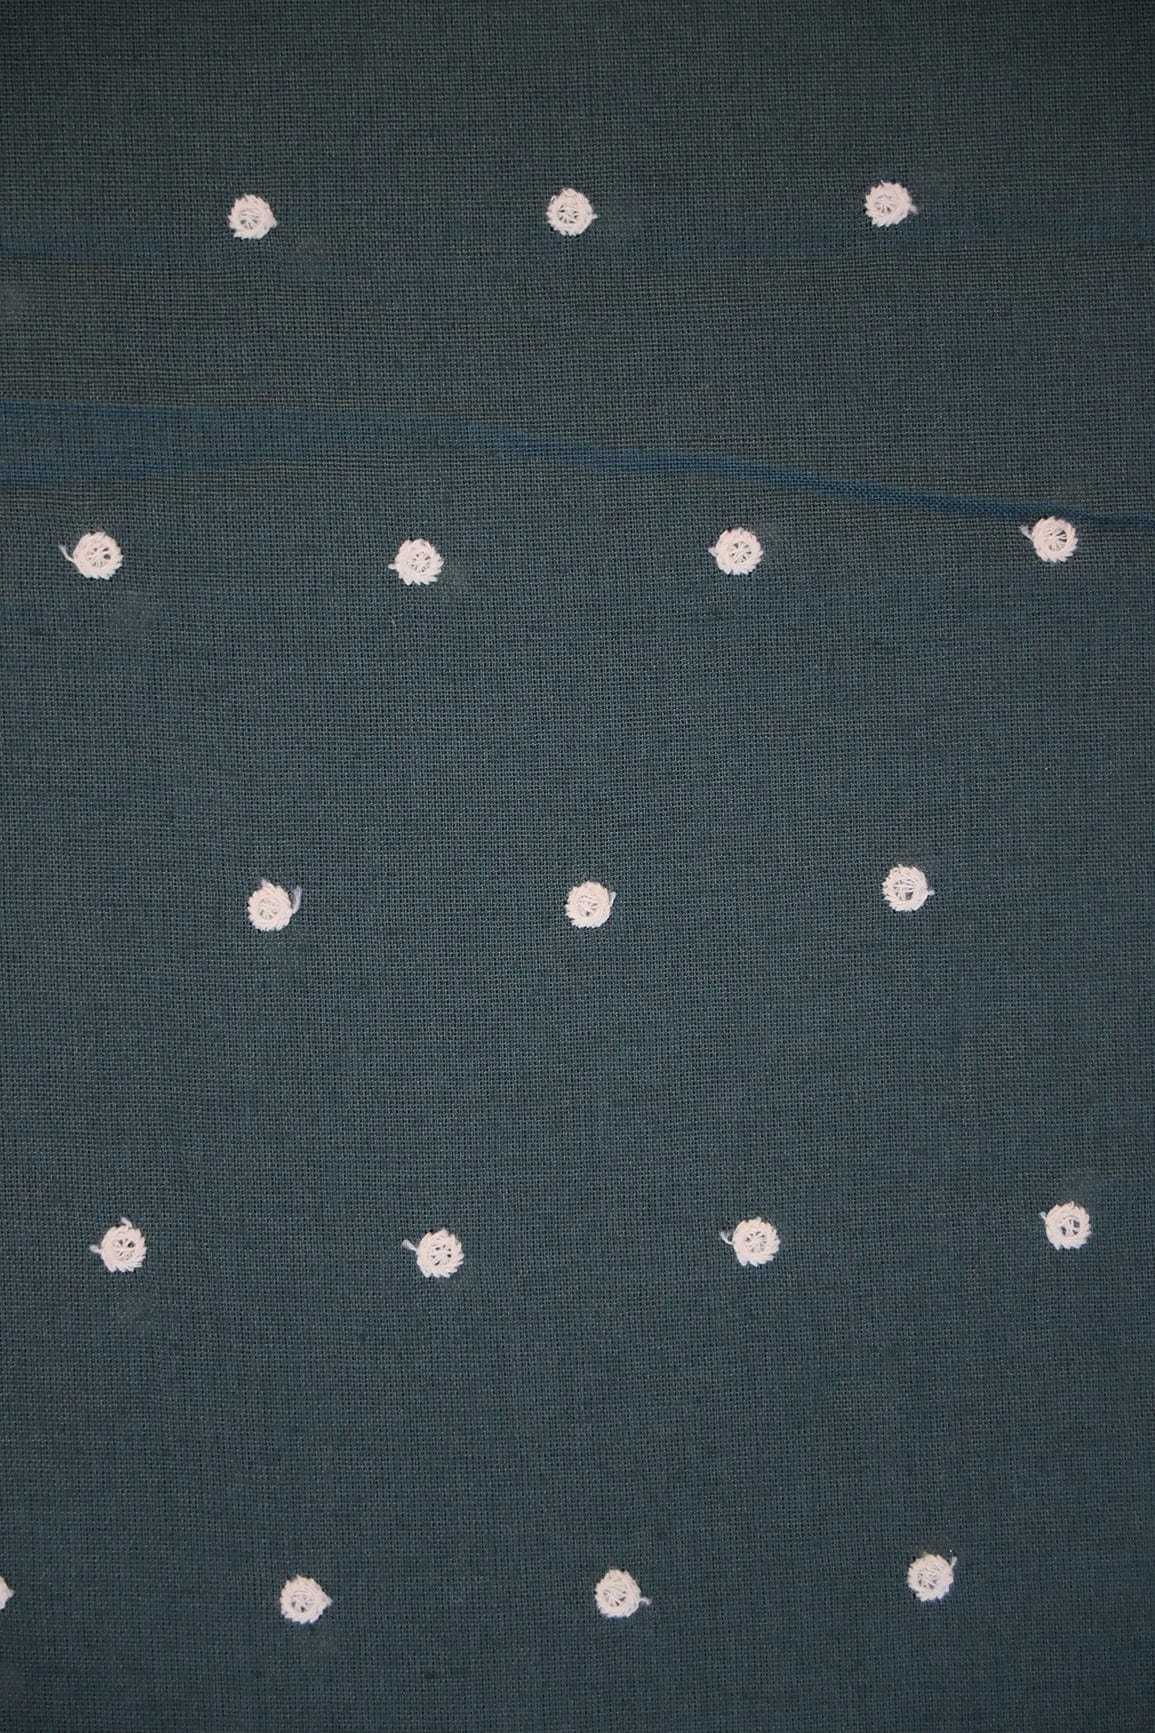 doeraa Embroidery Fabrics White Thread Small Polka Embroidery Work On Dark Peacock Green Cotton Linen Fabric